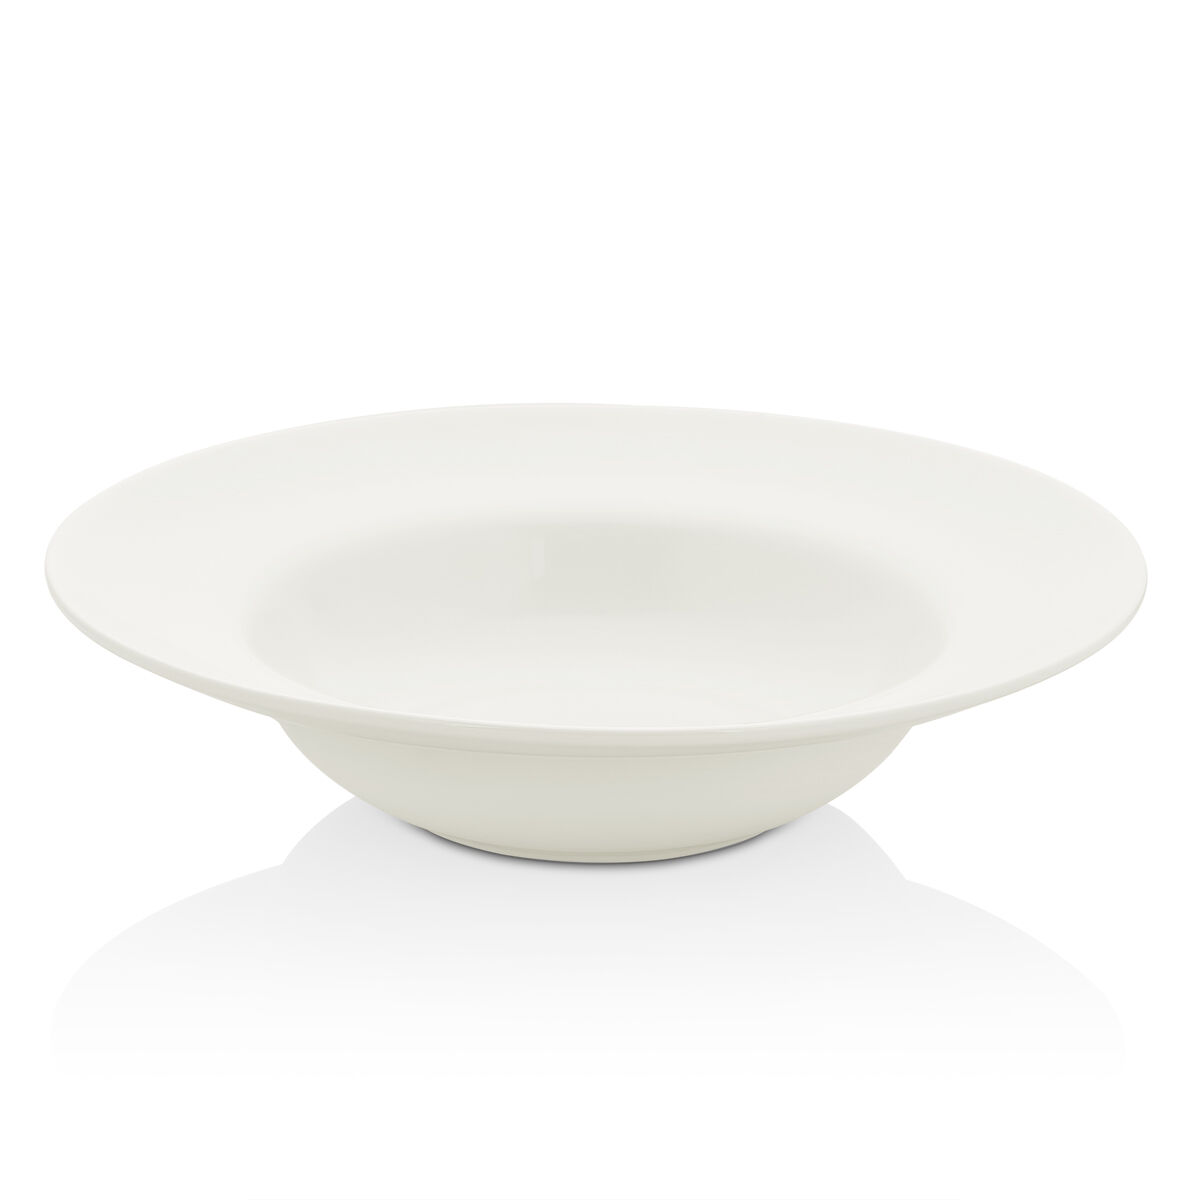 Тарелка для пасты, супа d = 27 см,500 мл, фарфор, серия "Arel", By Bone